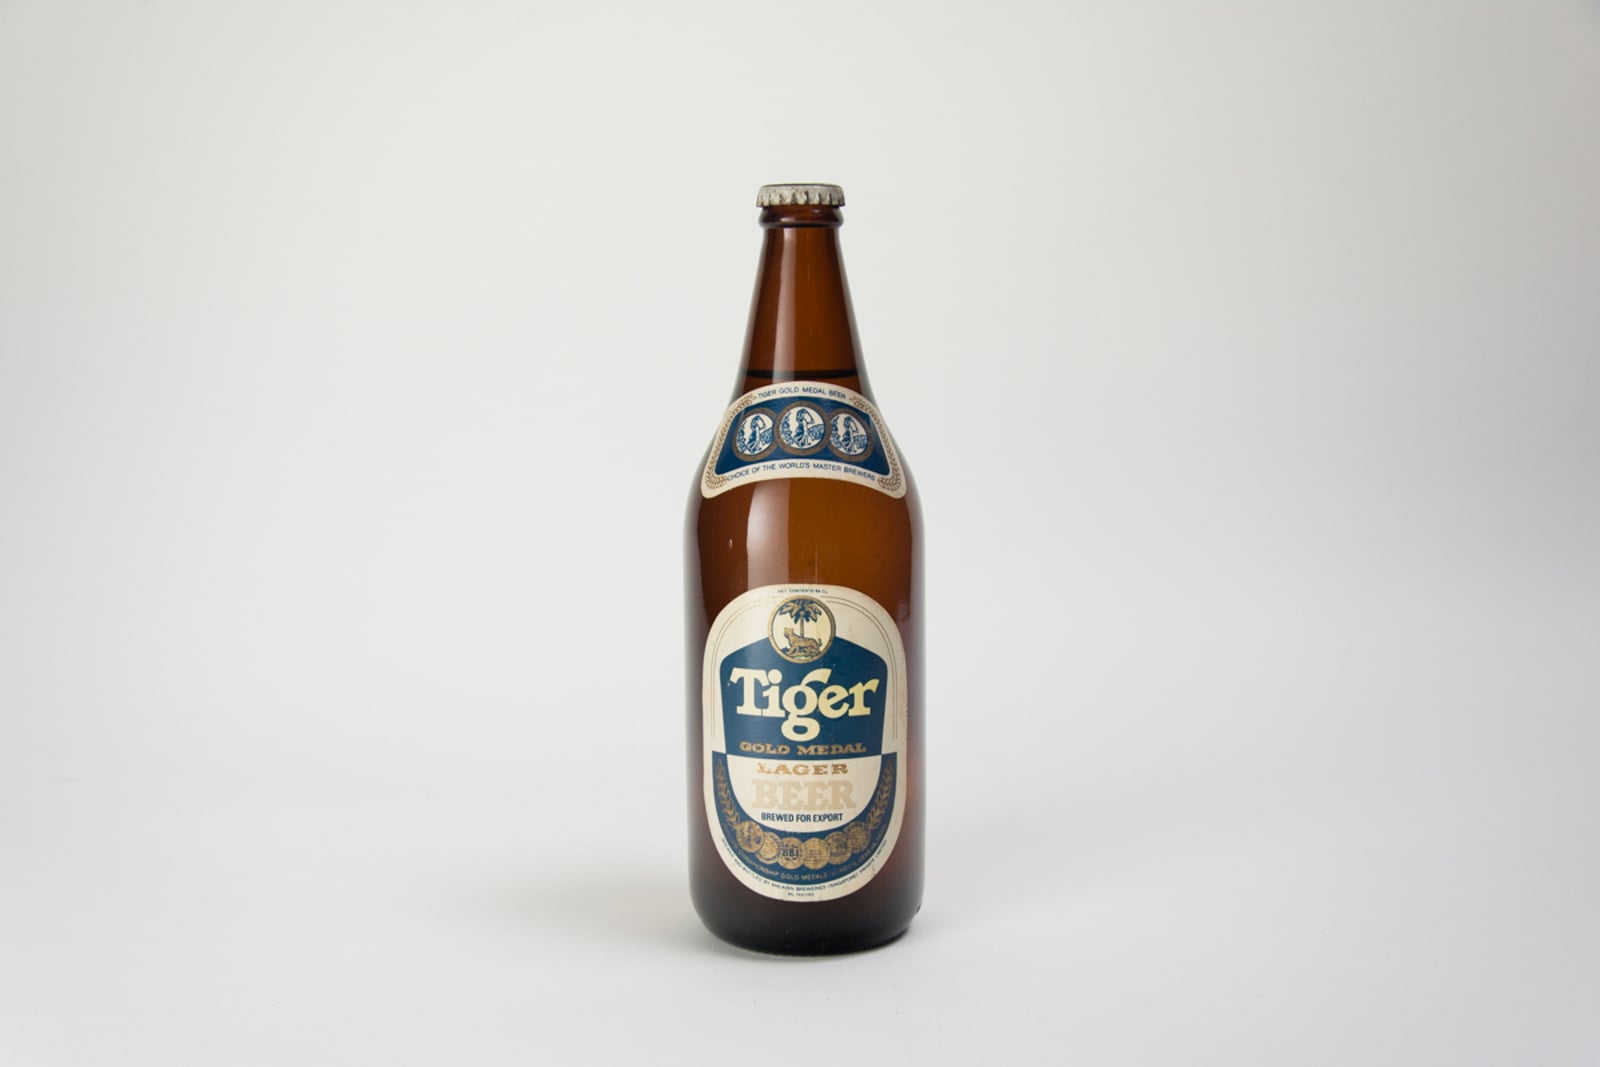 Tiger Gold Medal Lager Beer "Choice Of The World's Master Brewers" Vintage Bottle